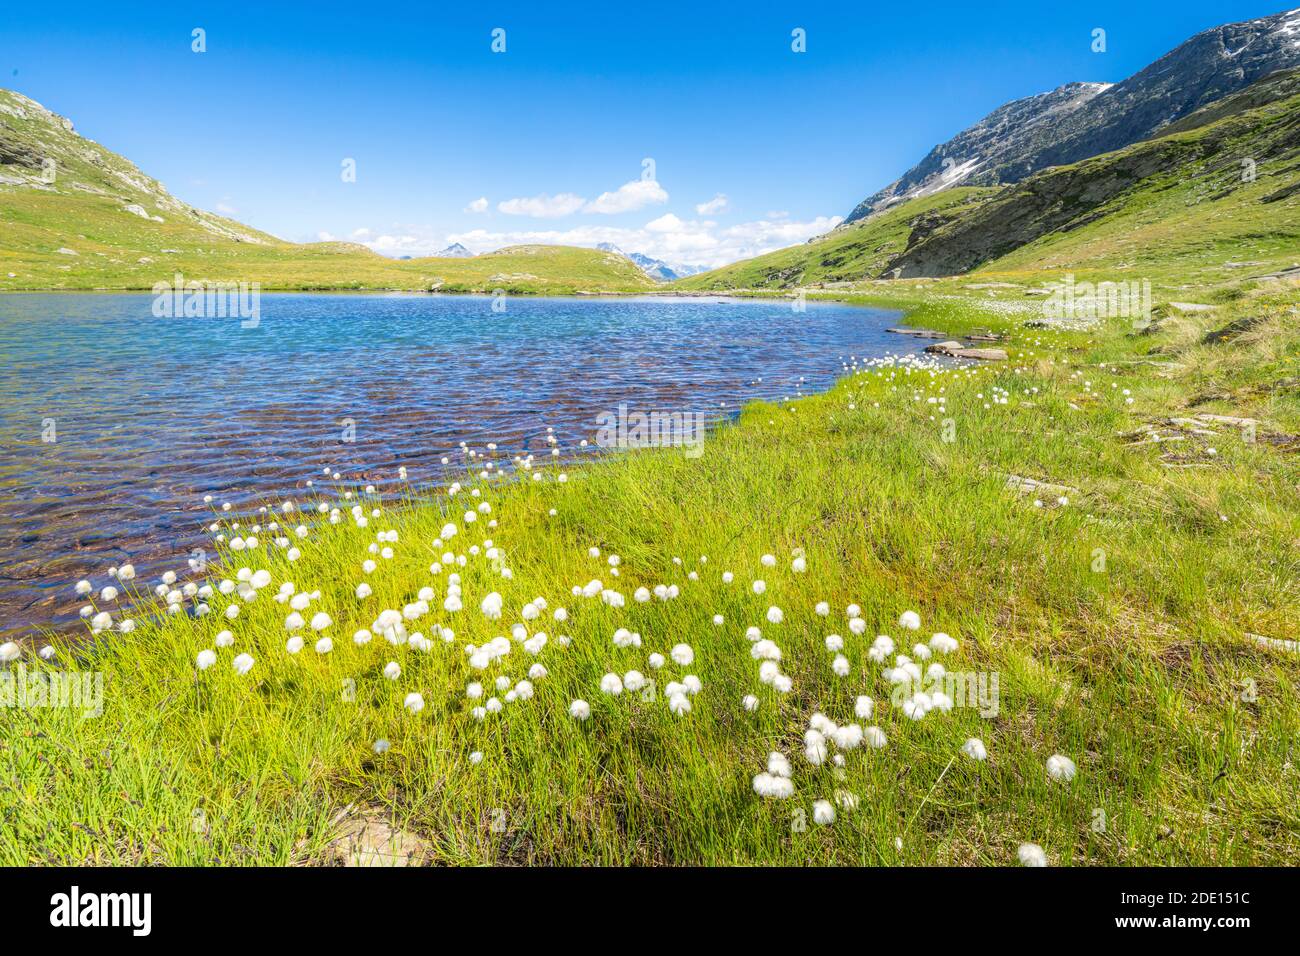 Summer blooming of cotton grass on shores of Baldiscio lakes, Val Febbraro, Valchiavenna, Vallespluga, Lombardy, Italy, Europe Stock Photo